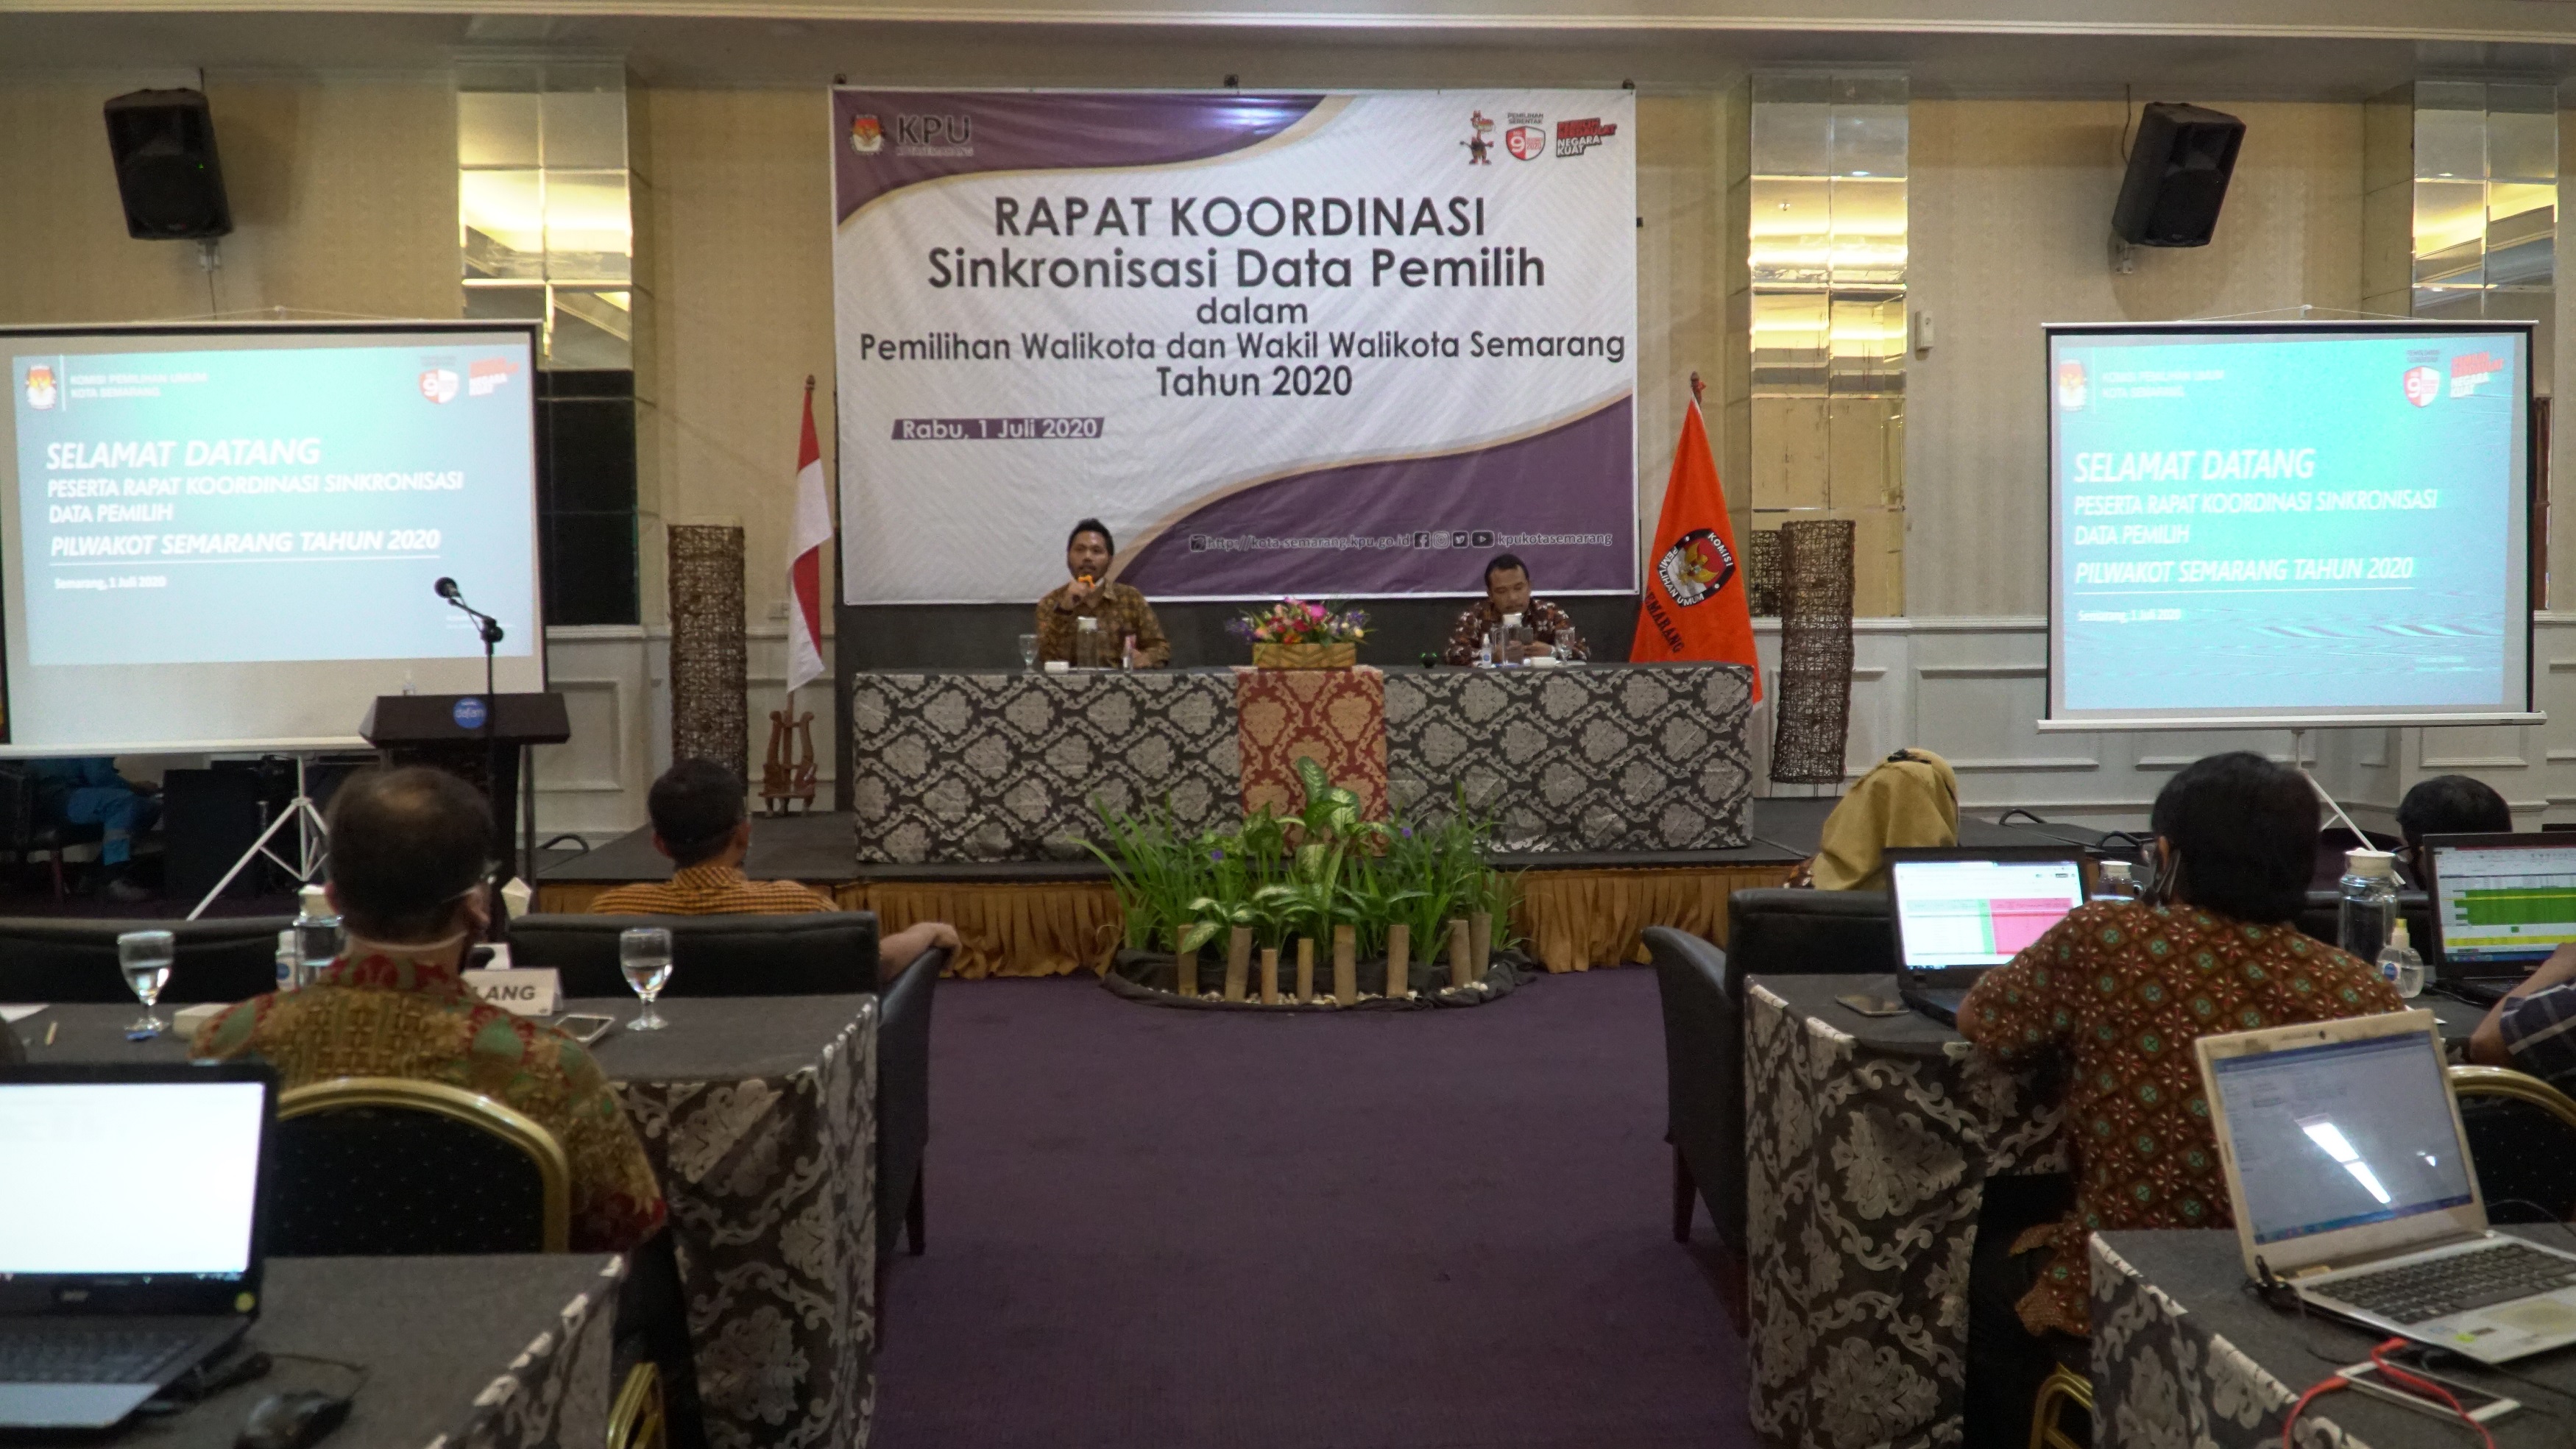 Sinkronisasi Data Pemilih di hotel Dafam Semarang